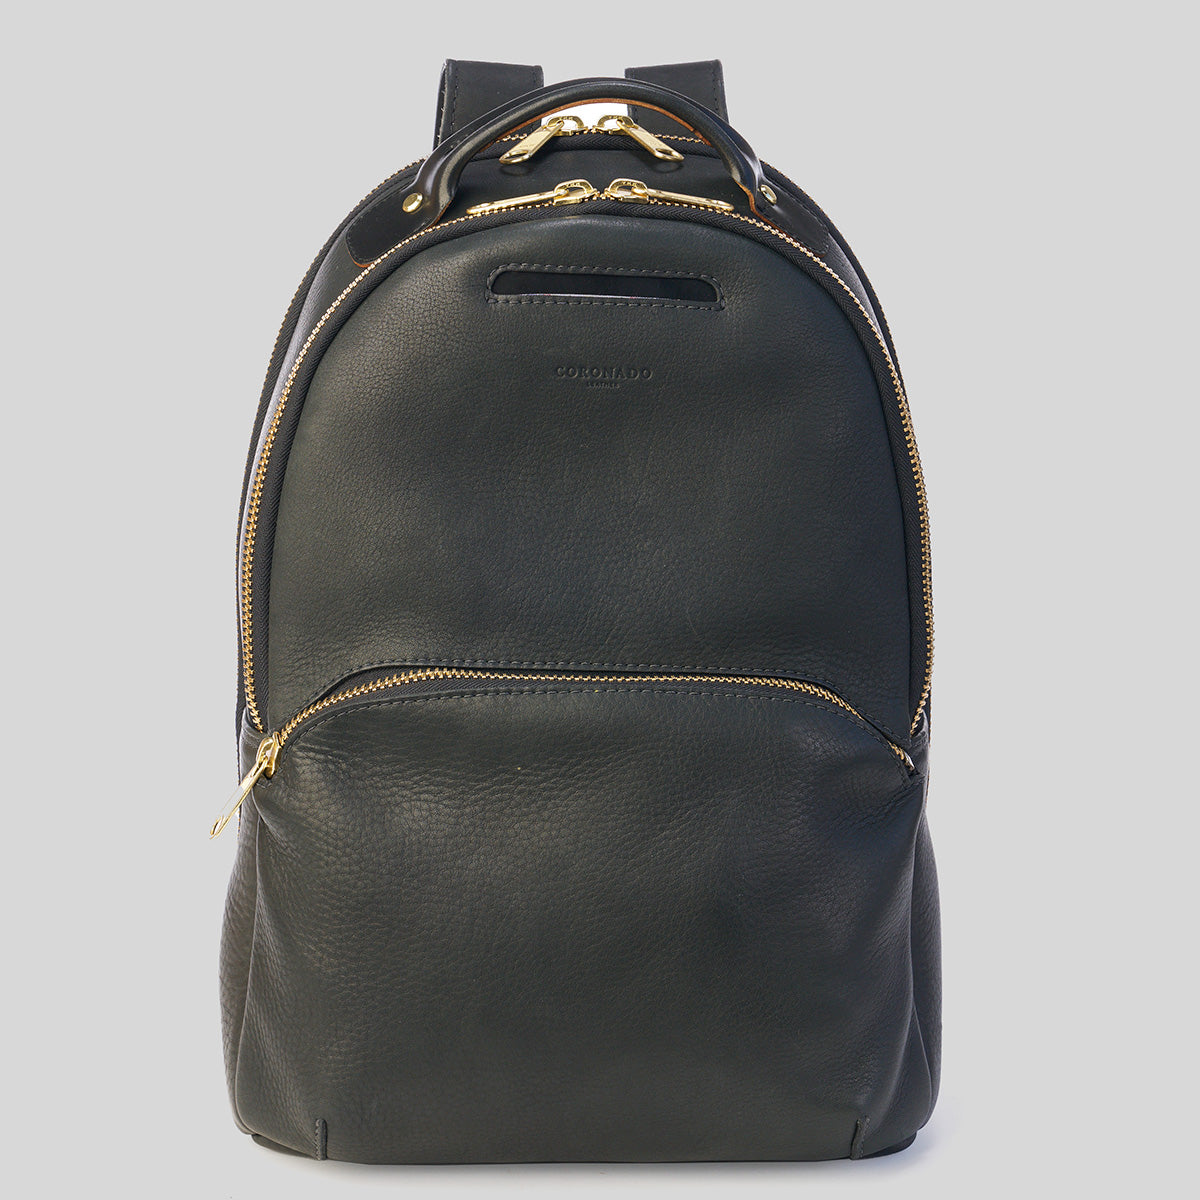 Gray Leather Backpack for Women | Designer Backpack Purses